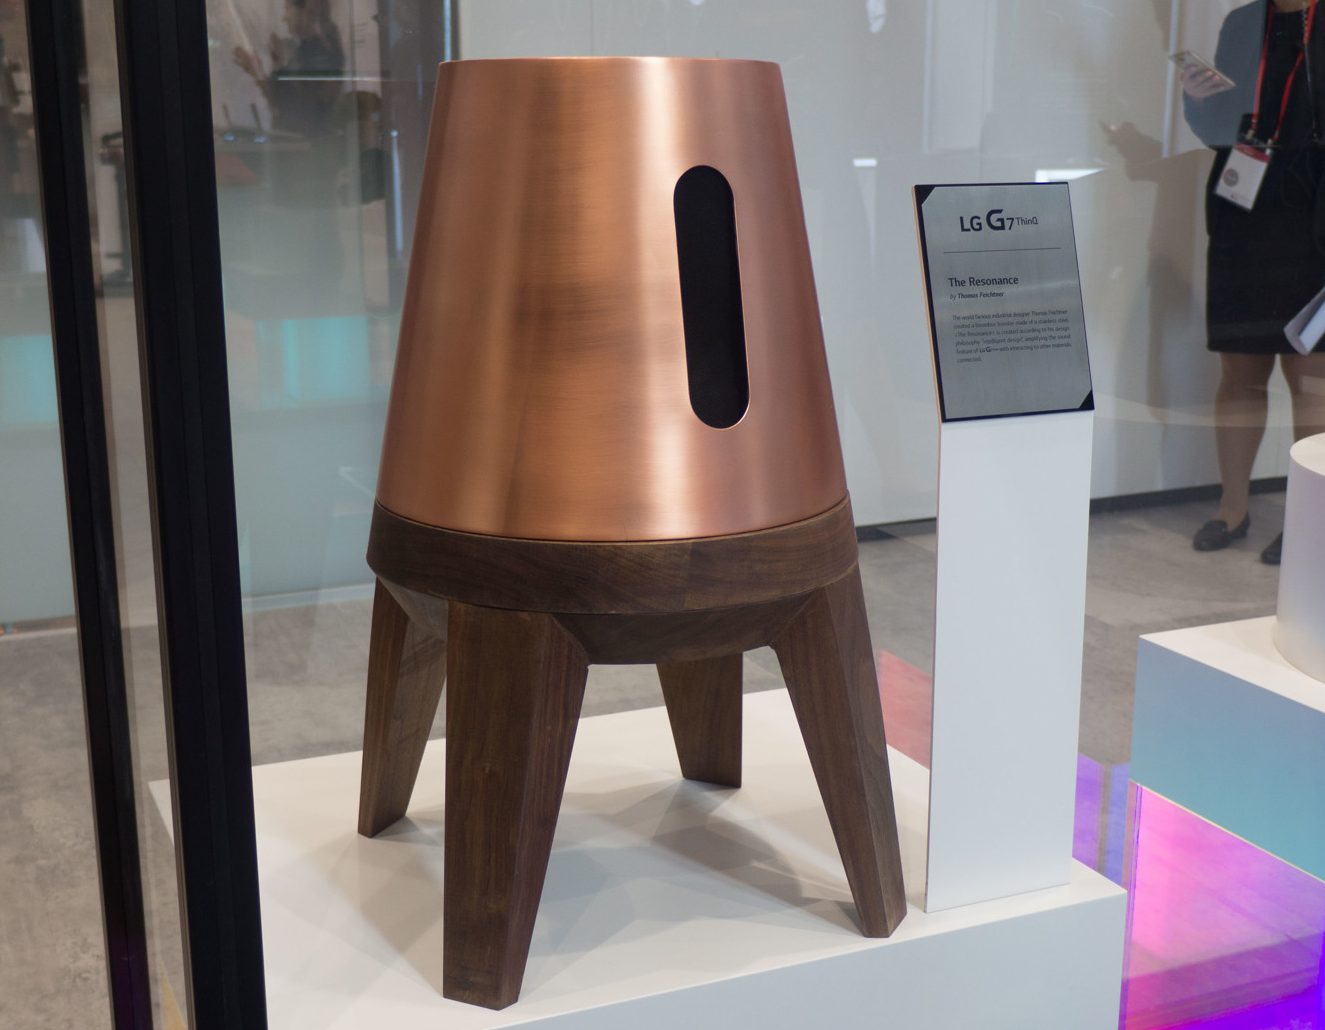 LG G7 boombox speaker